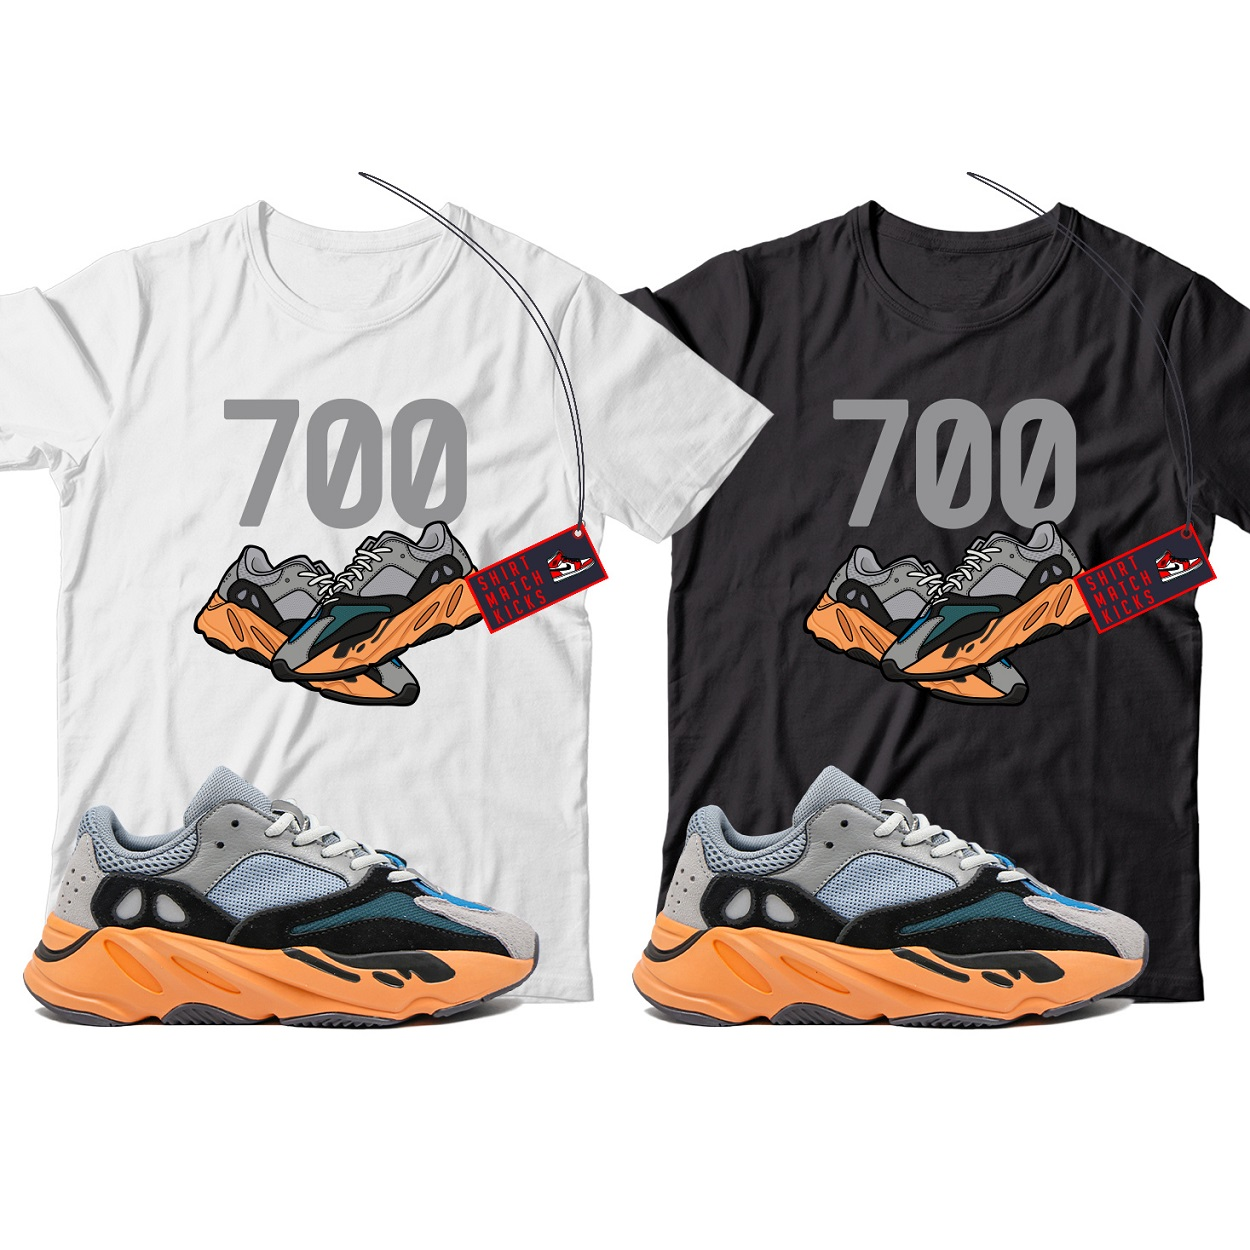 Yeezy 700 Wash Orange Shirt